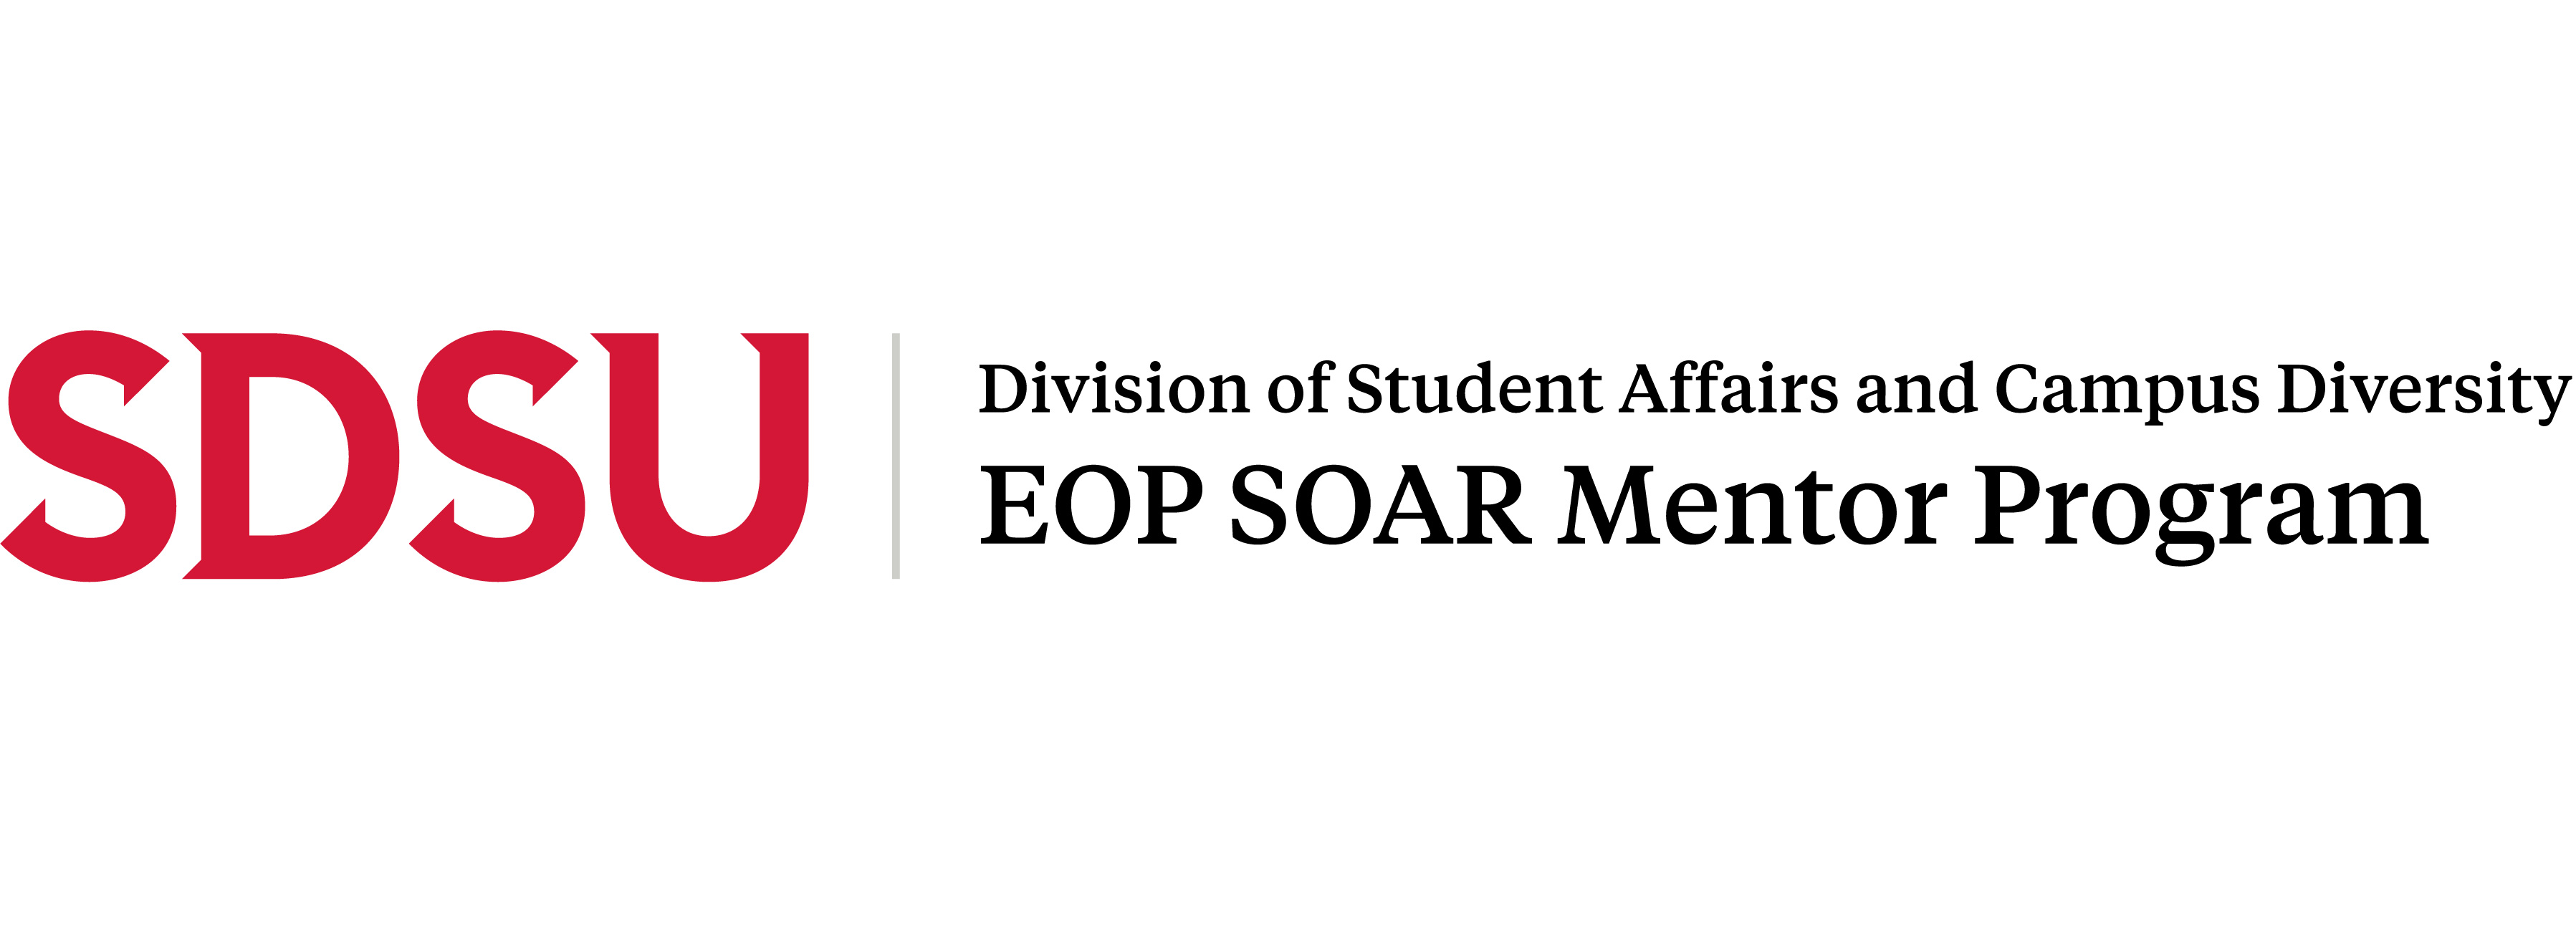 SOAR Mentor Program